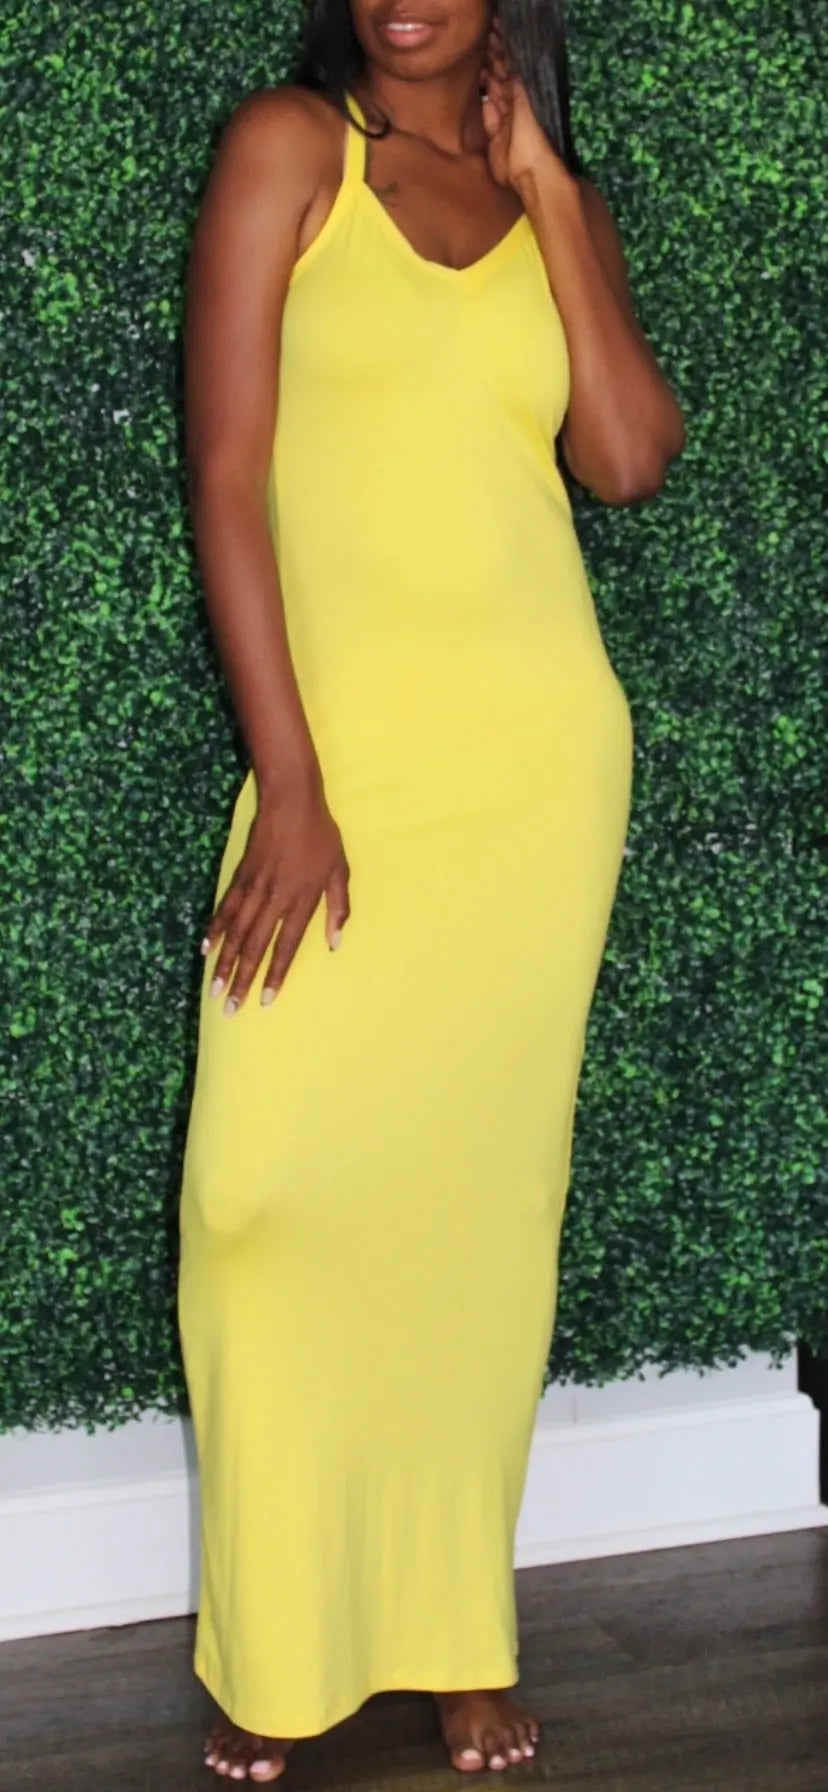 Model is wearing a yellow maxi dress